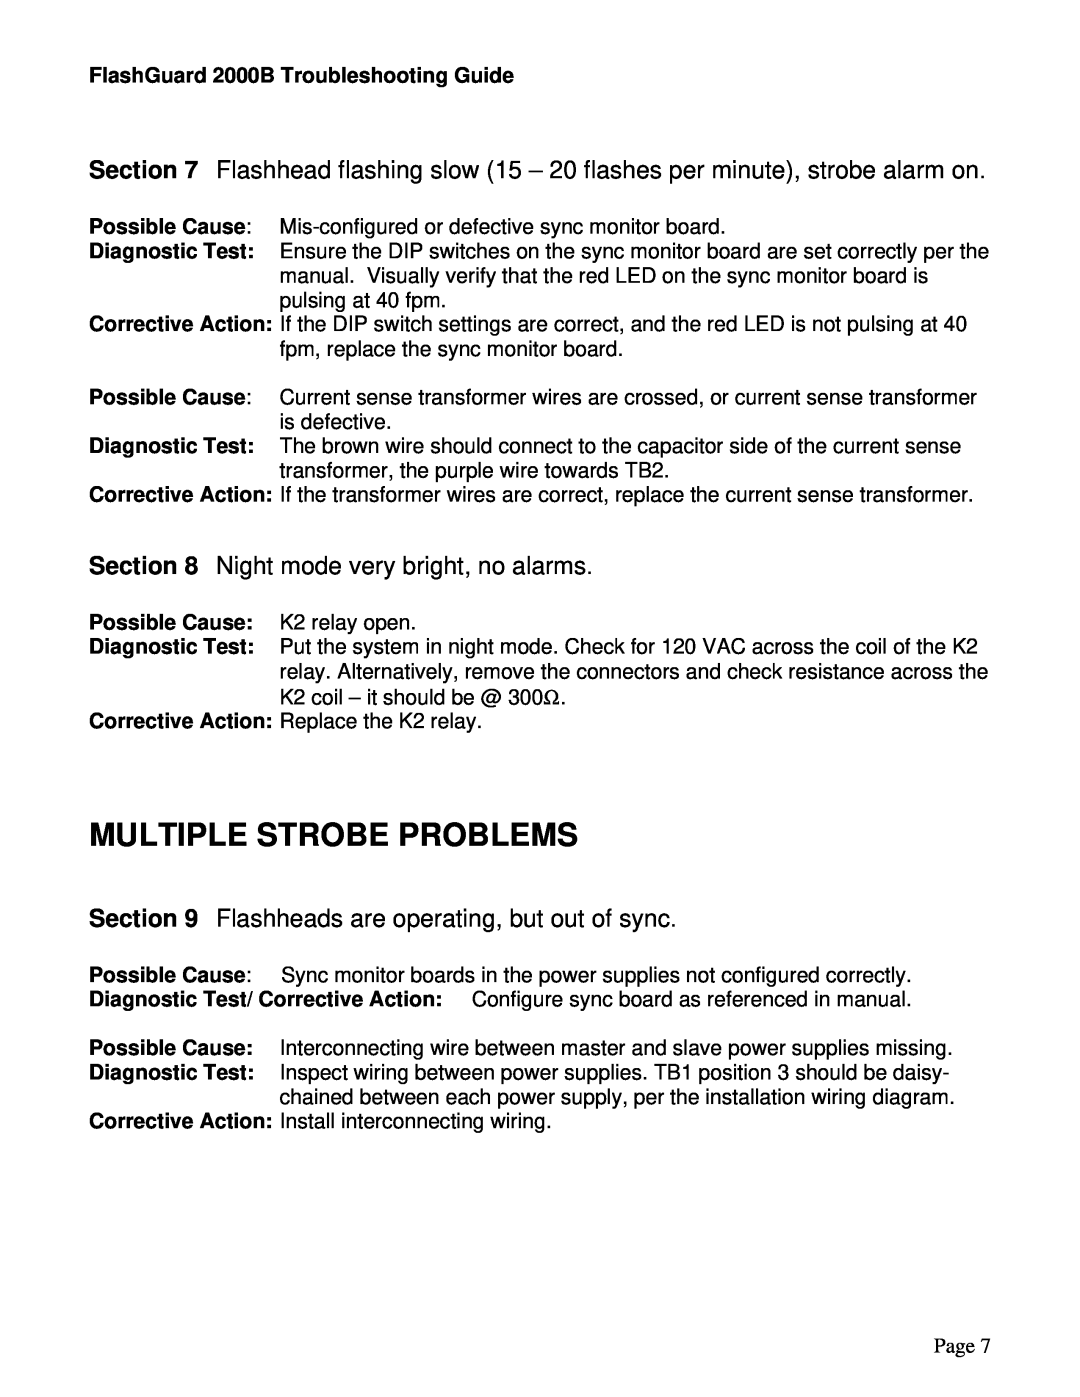 Honeywell 2000B manual Multiple Strobe Problems 